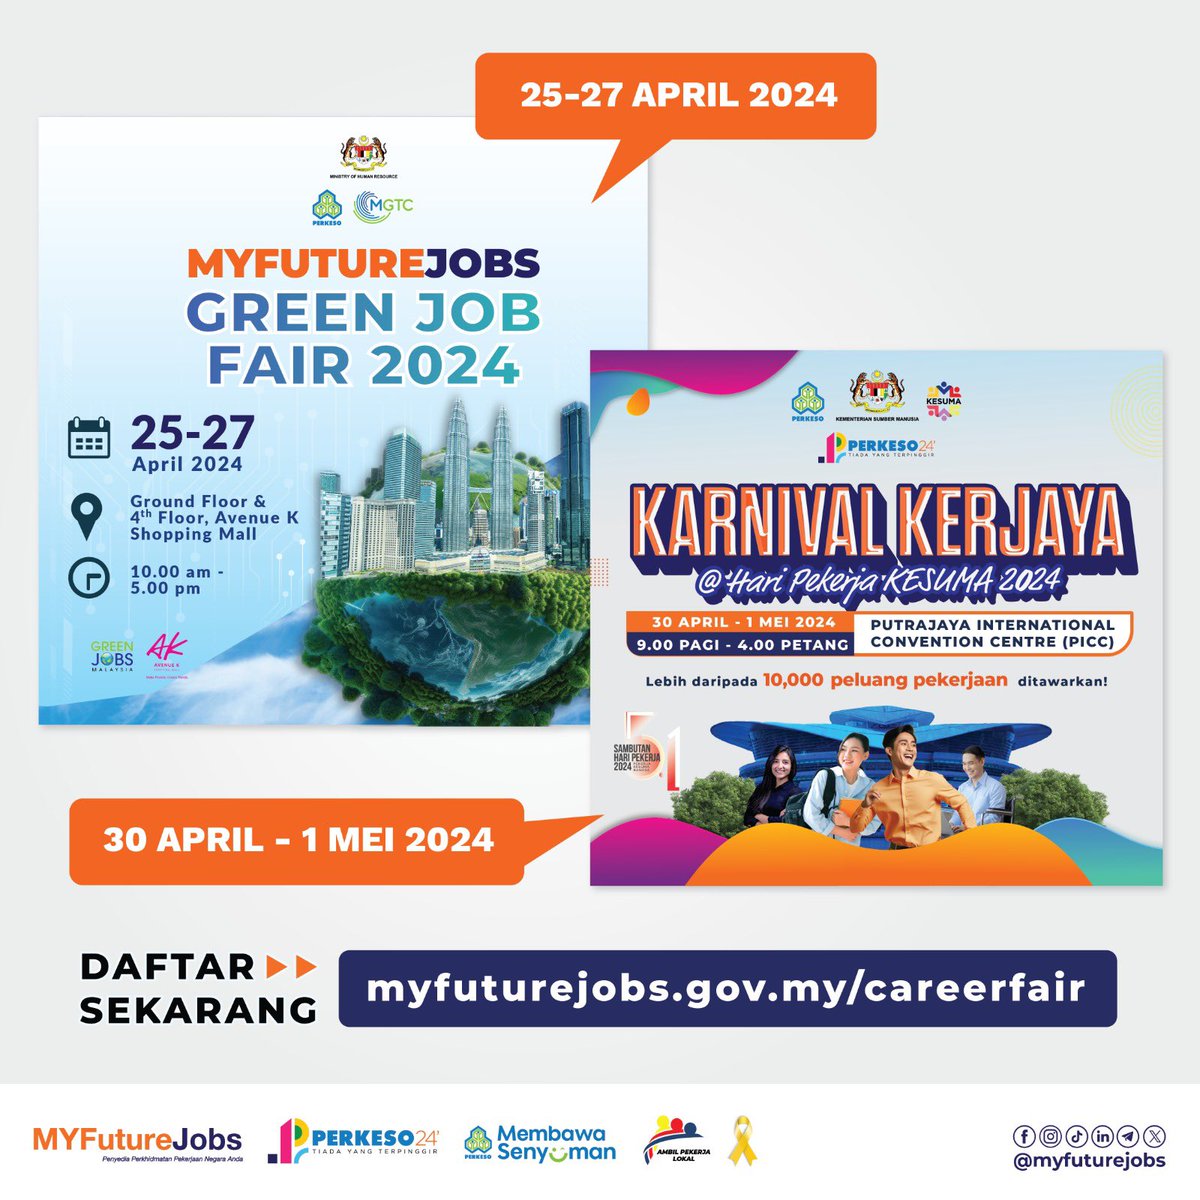 Discover 13,000+ job openings at MYFutureJobs Green Job Fair, Avenue K, and Karnival Kerjaya @ Hari Pekerja KESUMA 2024, Putrajaya International Convention Centre. Register at myfuturejobs.gov.my/careerfair